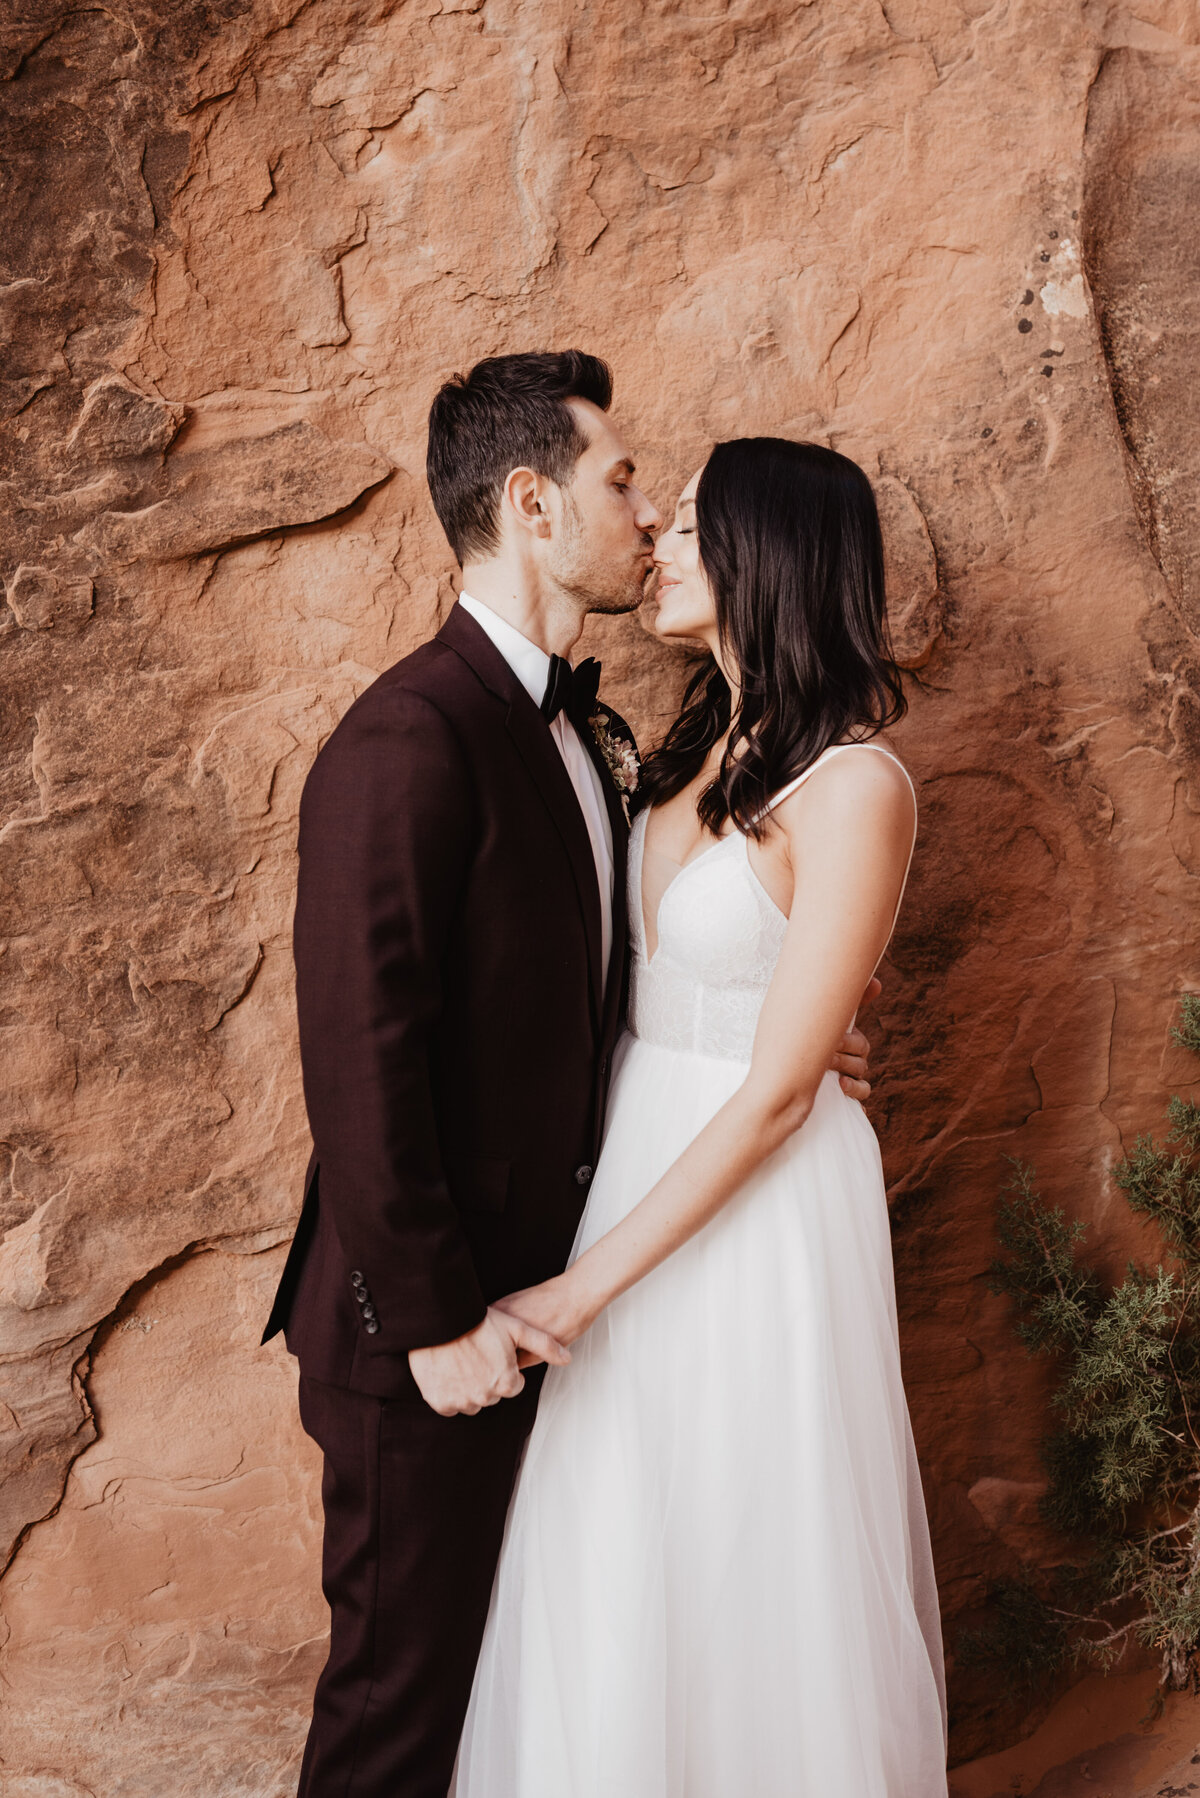 Utah elopement photographer captures groom kissing bride on nose